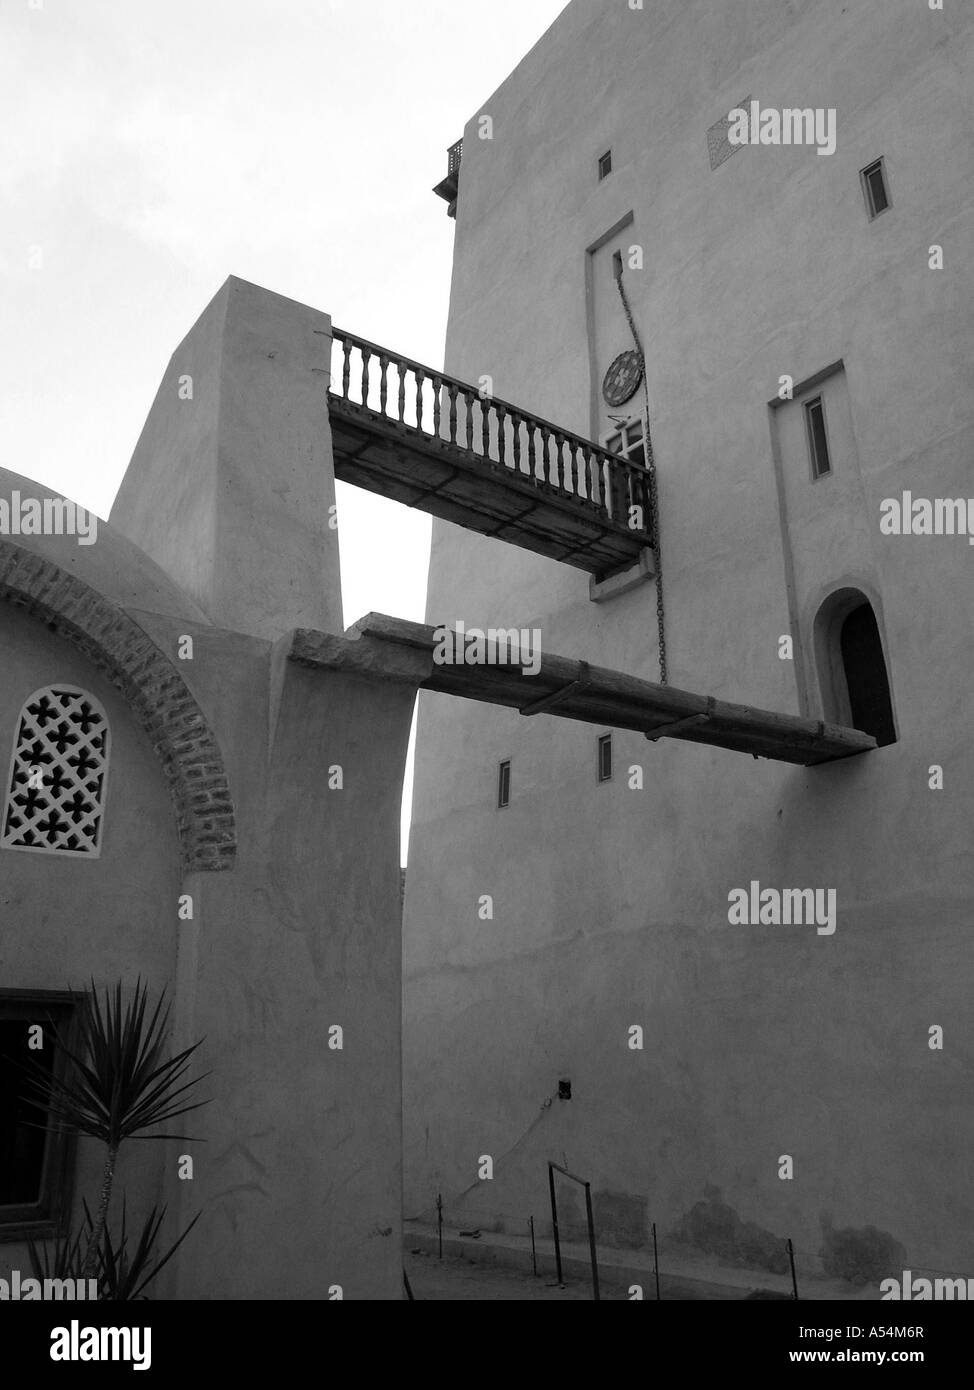 Painet ip1633 8103 black and white egypt drawbridges keep sourian coptic orthodox monastery wadi natrun country developing Stock Photo